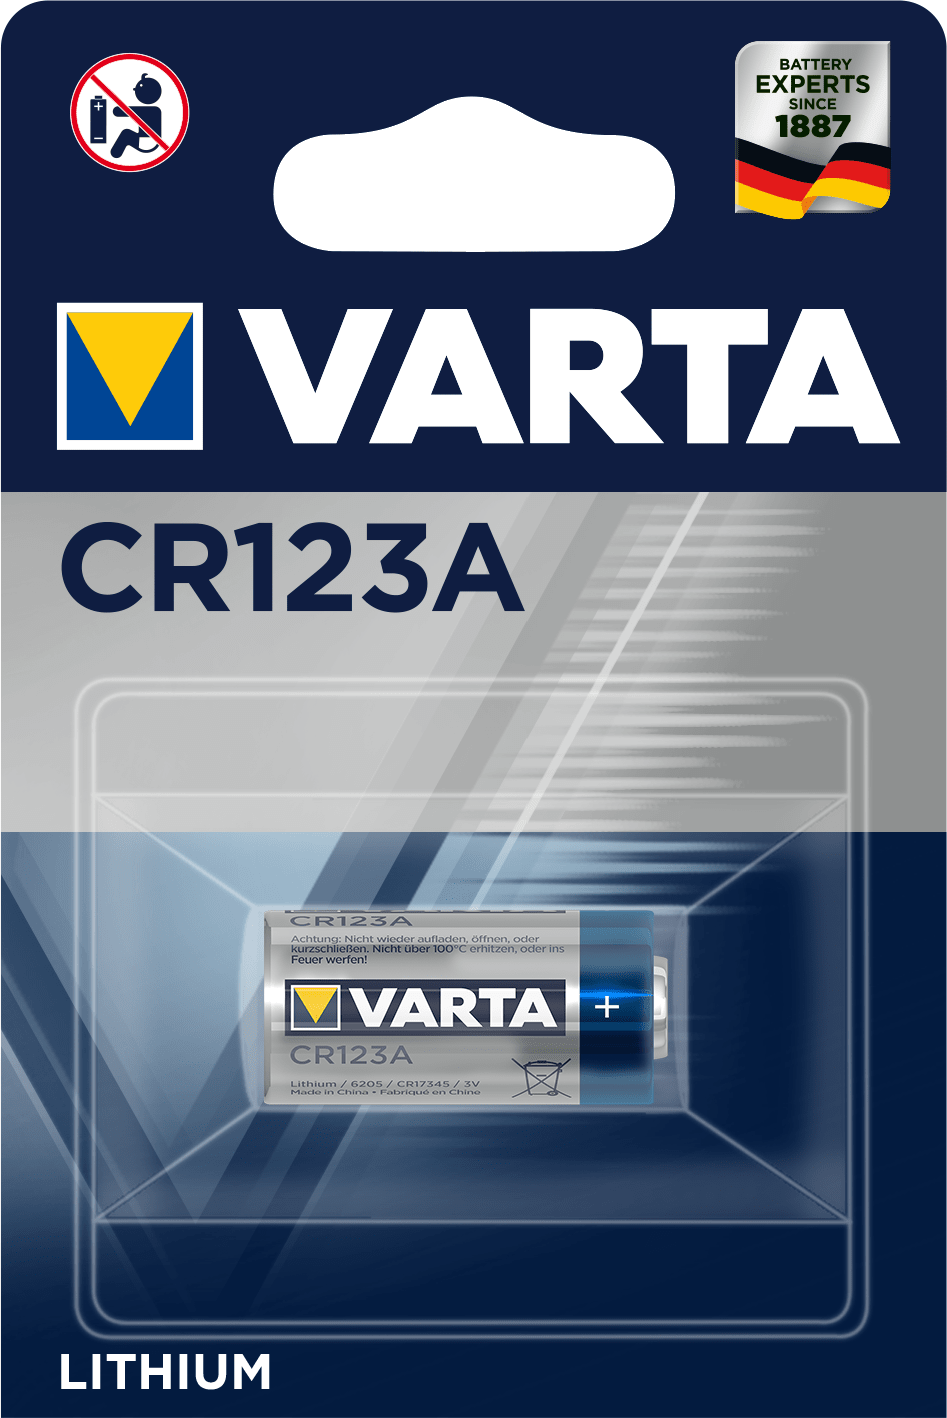 Varta - Pile lithium photo CR123. Blister x1